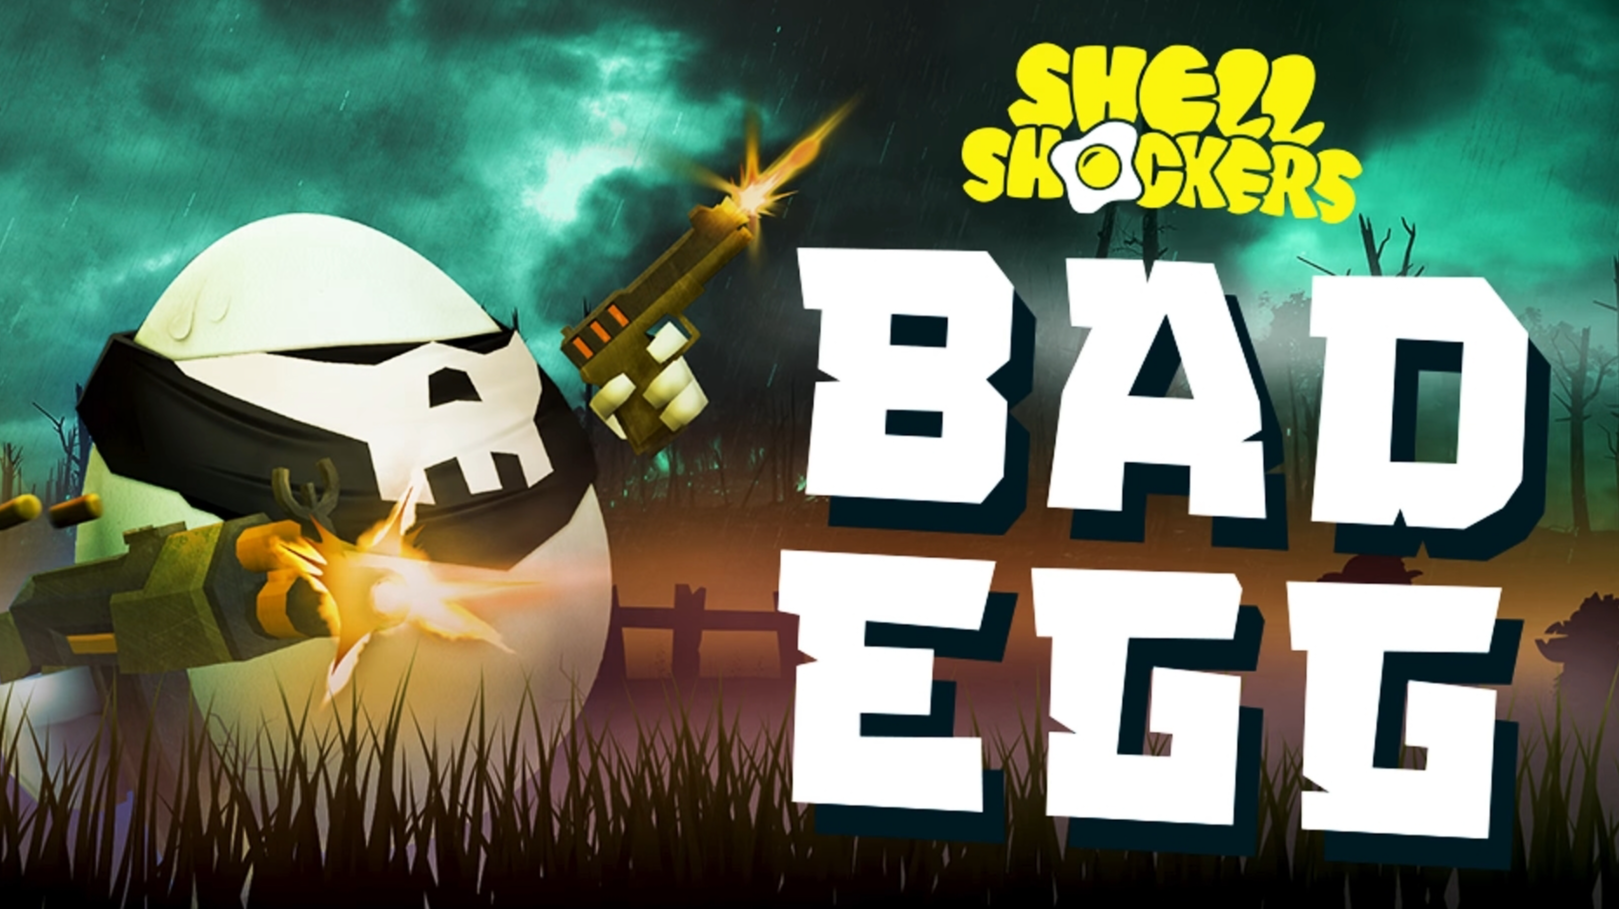 online egg shooting game